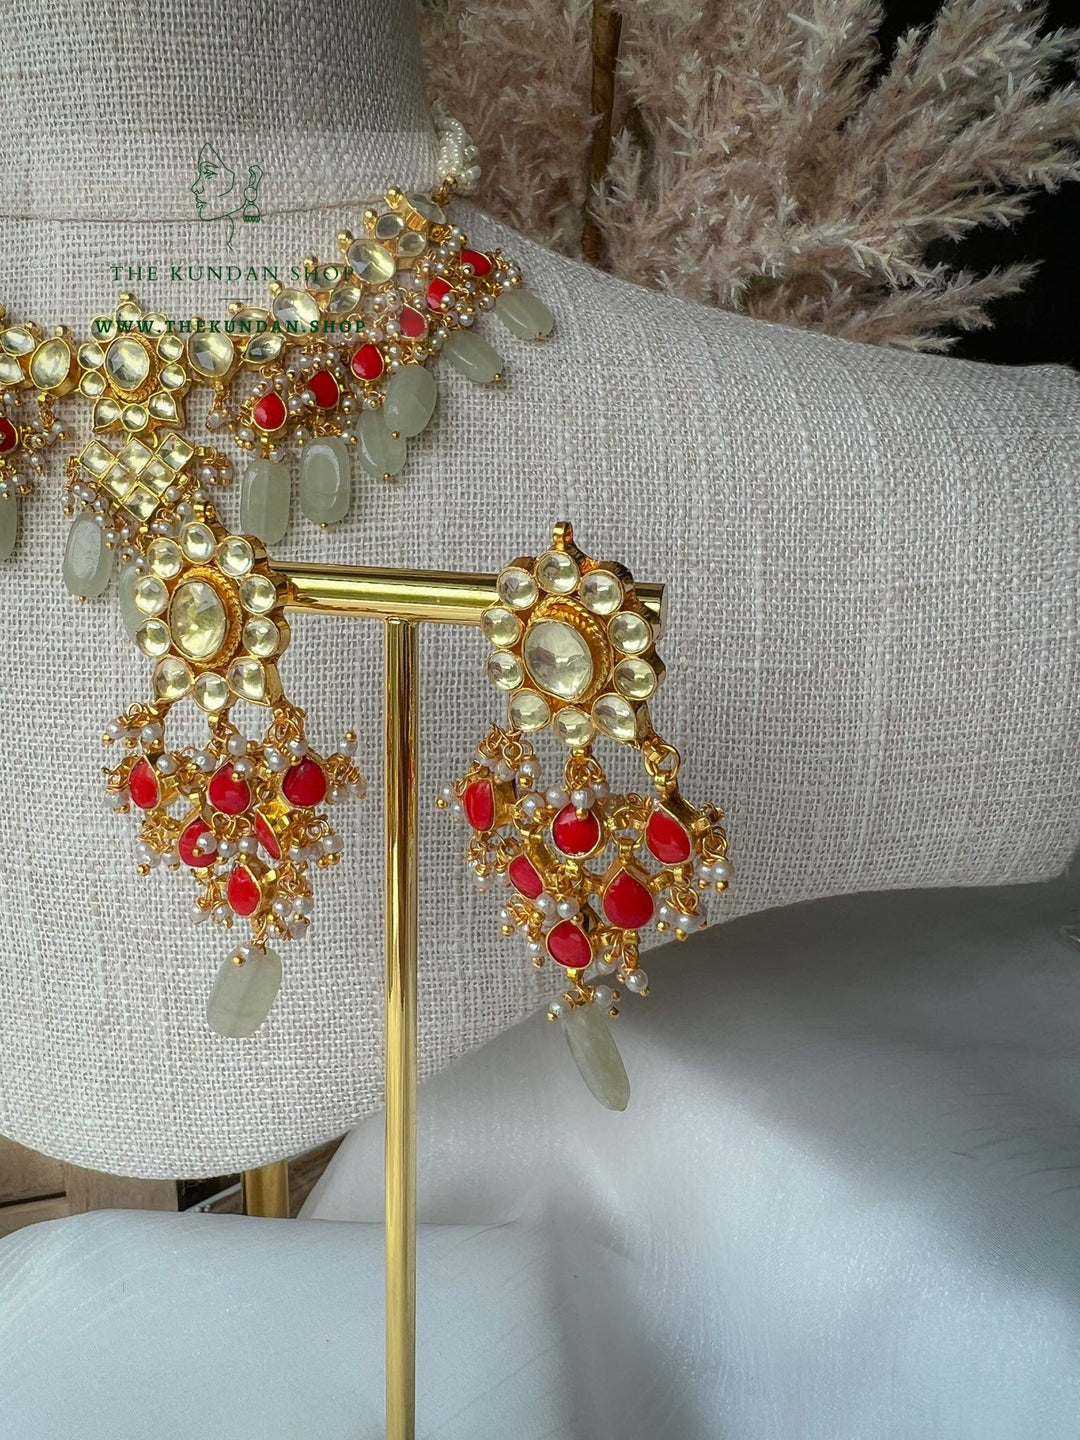 Floral Kundan in Coral & Mint Necklace Sets THE KUNDAN SHOP 